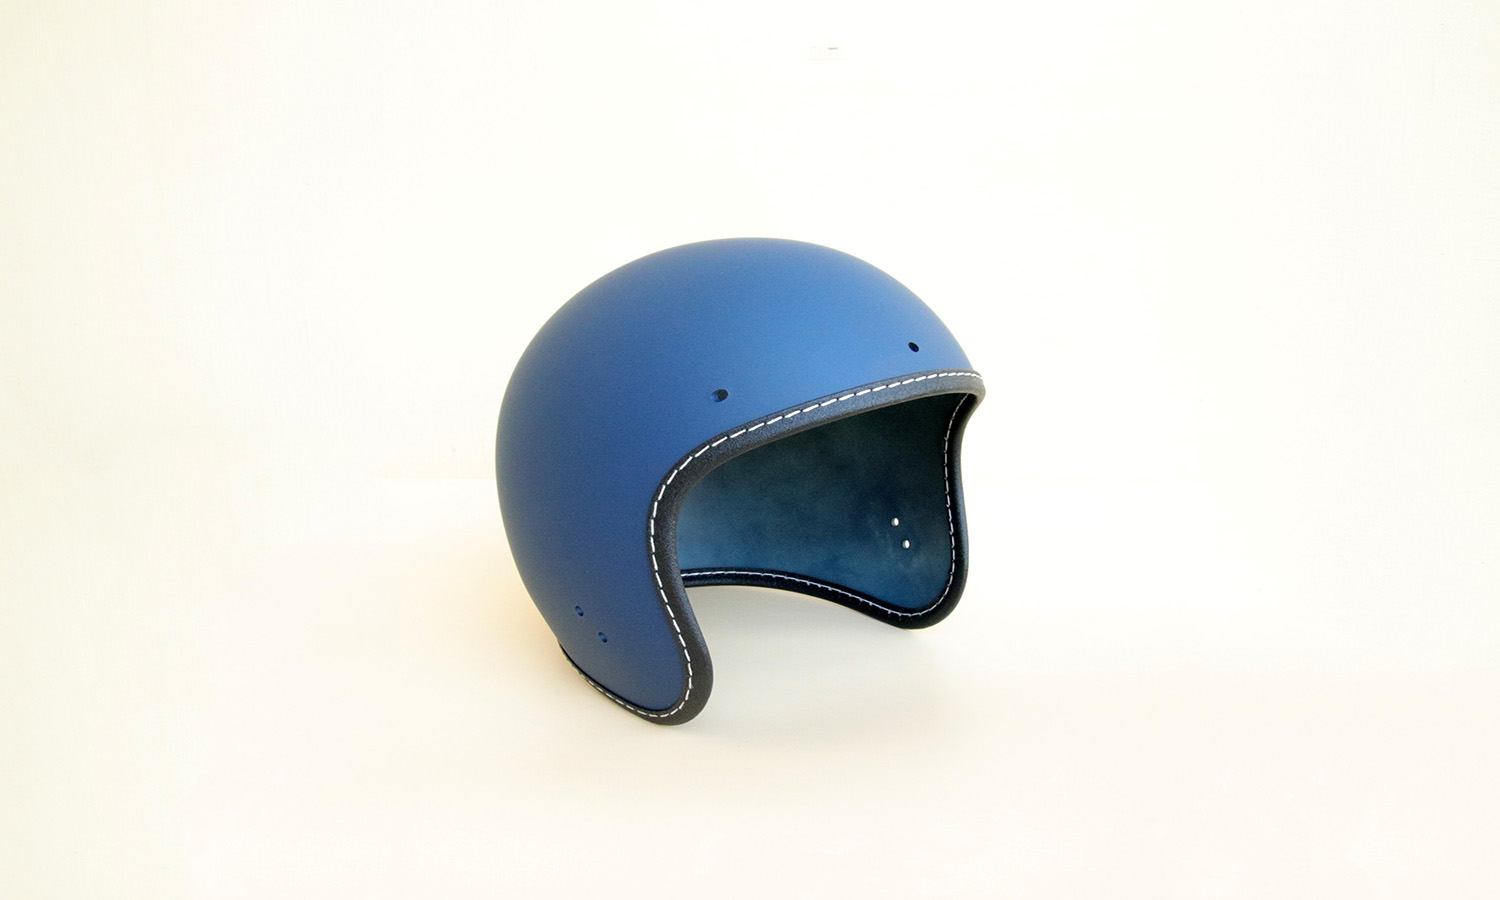 Helmet Edge Stitching <br />
Processing<br />
(ND-512)